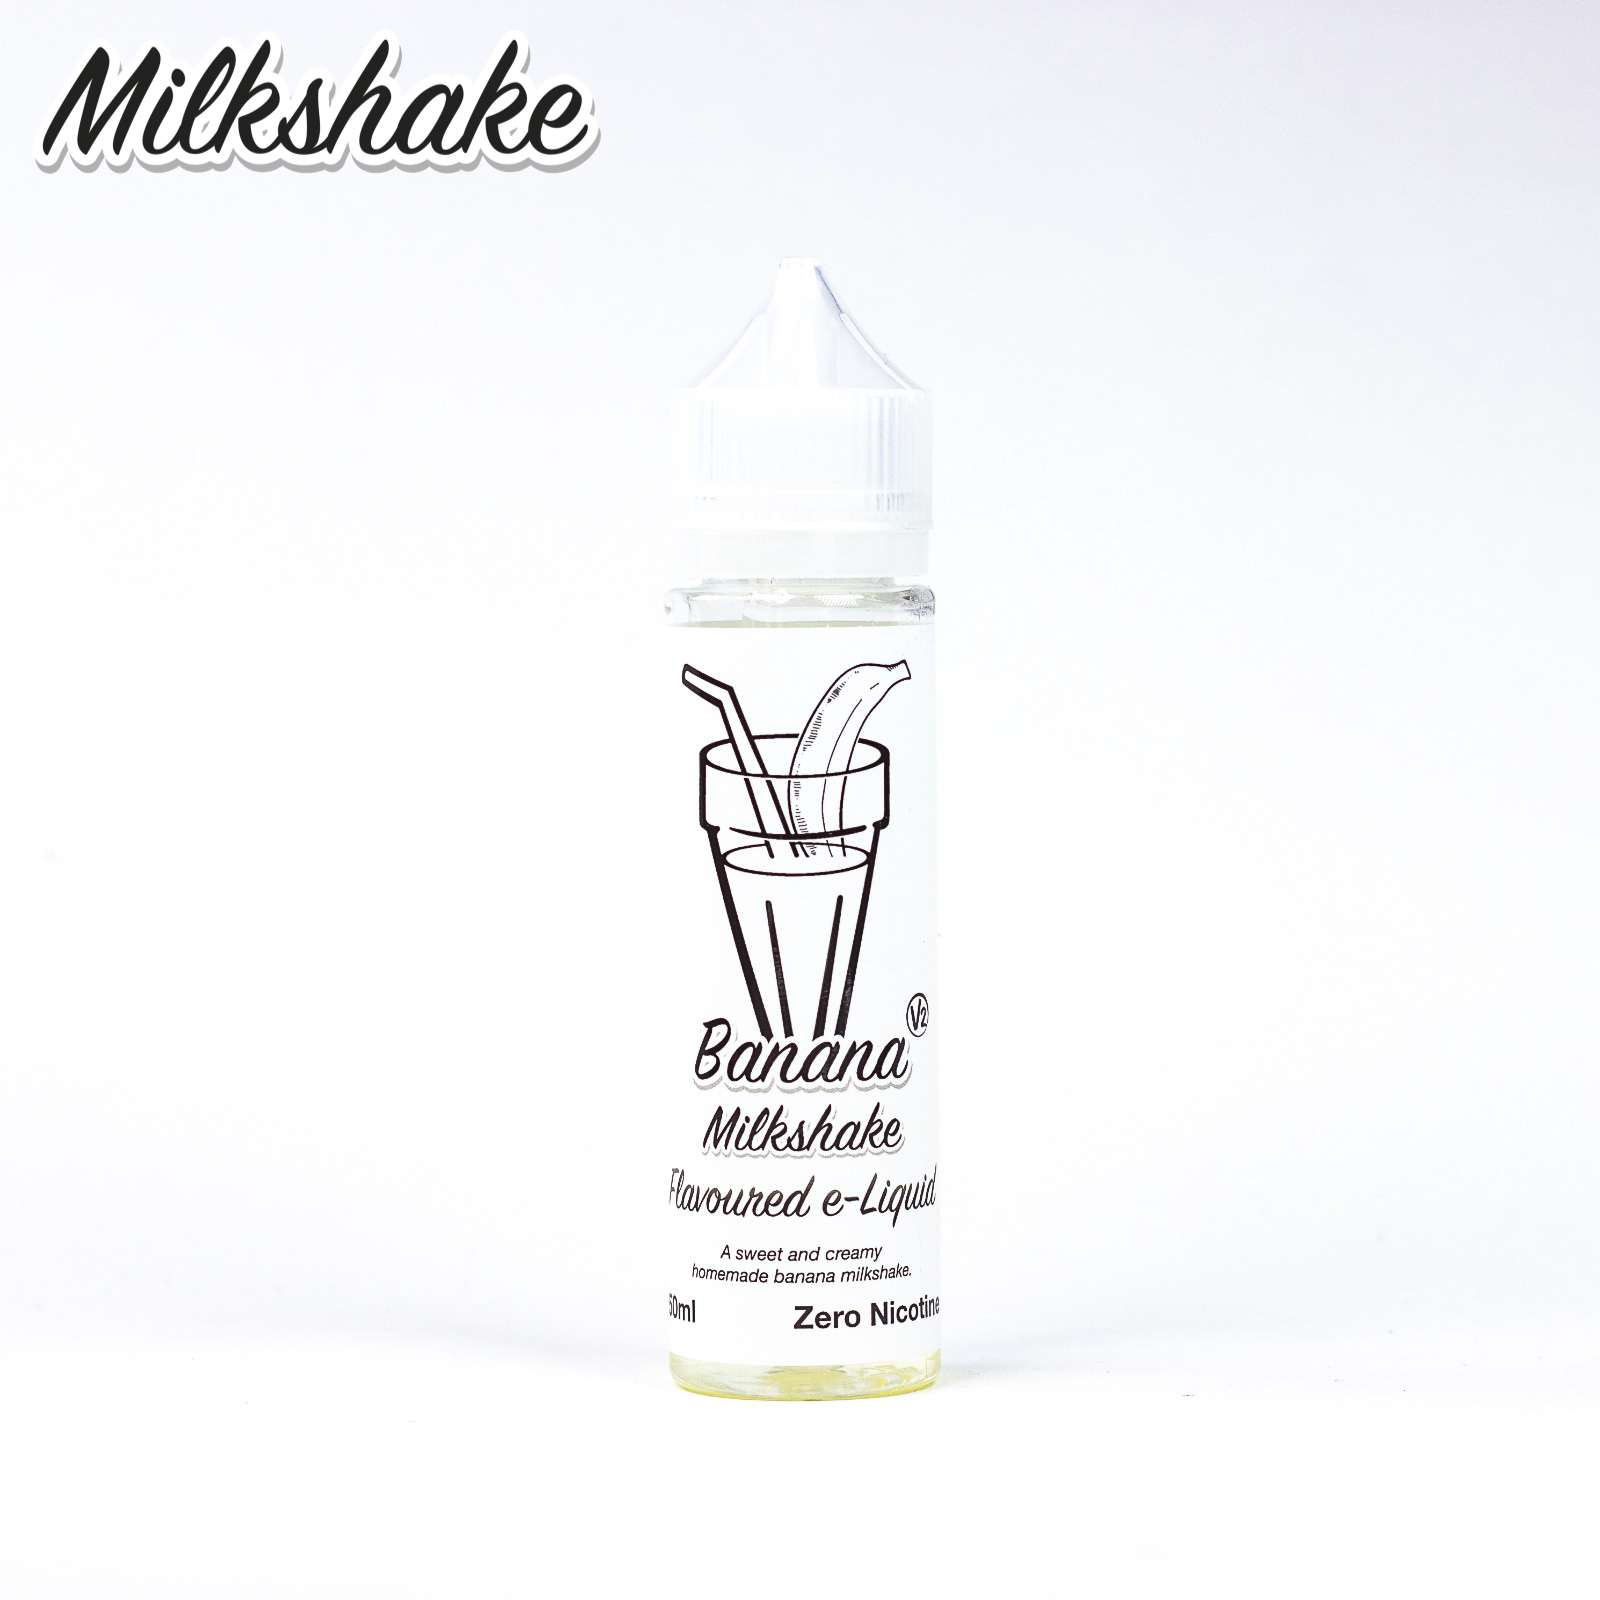 Eco Vape Milkshake E Liquid - Strawberry Milkshake- 50ml